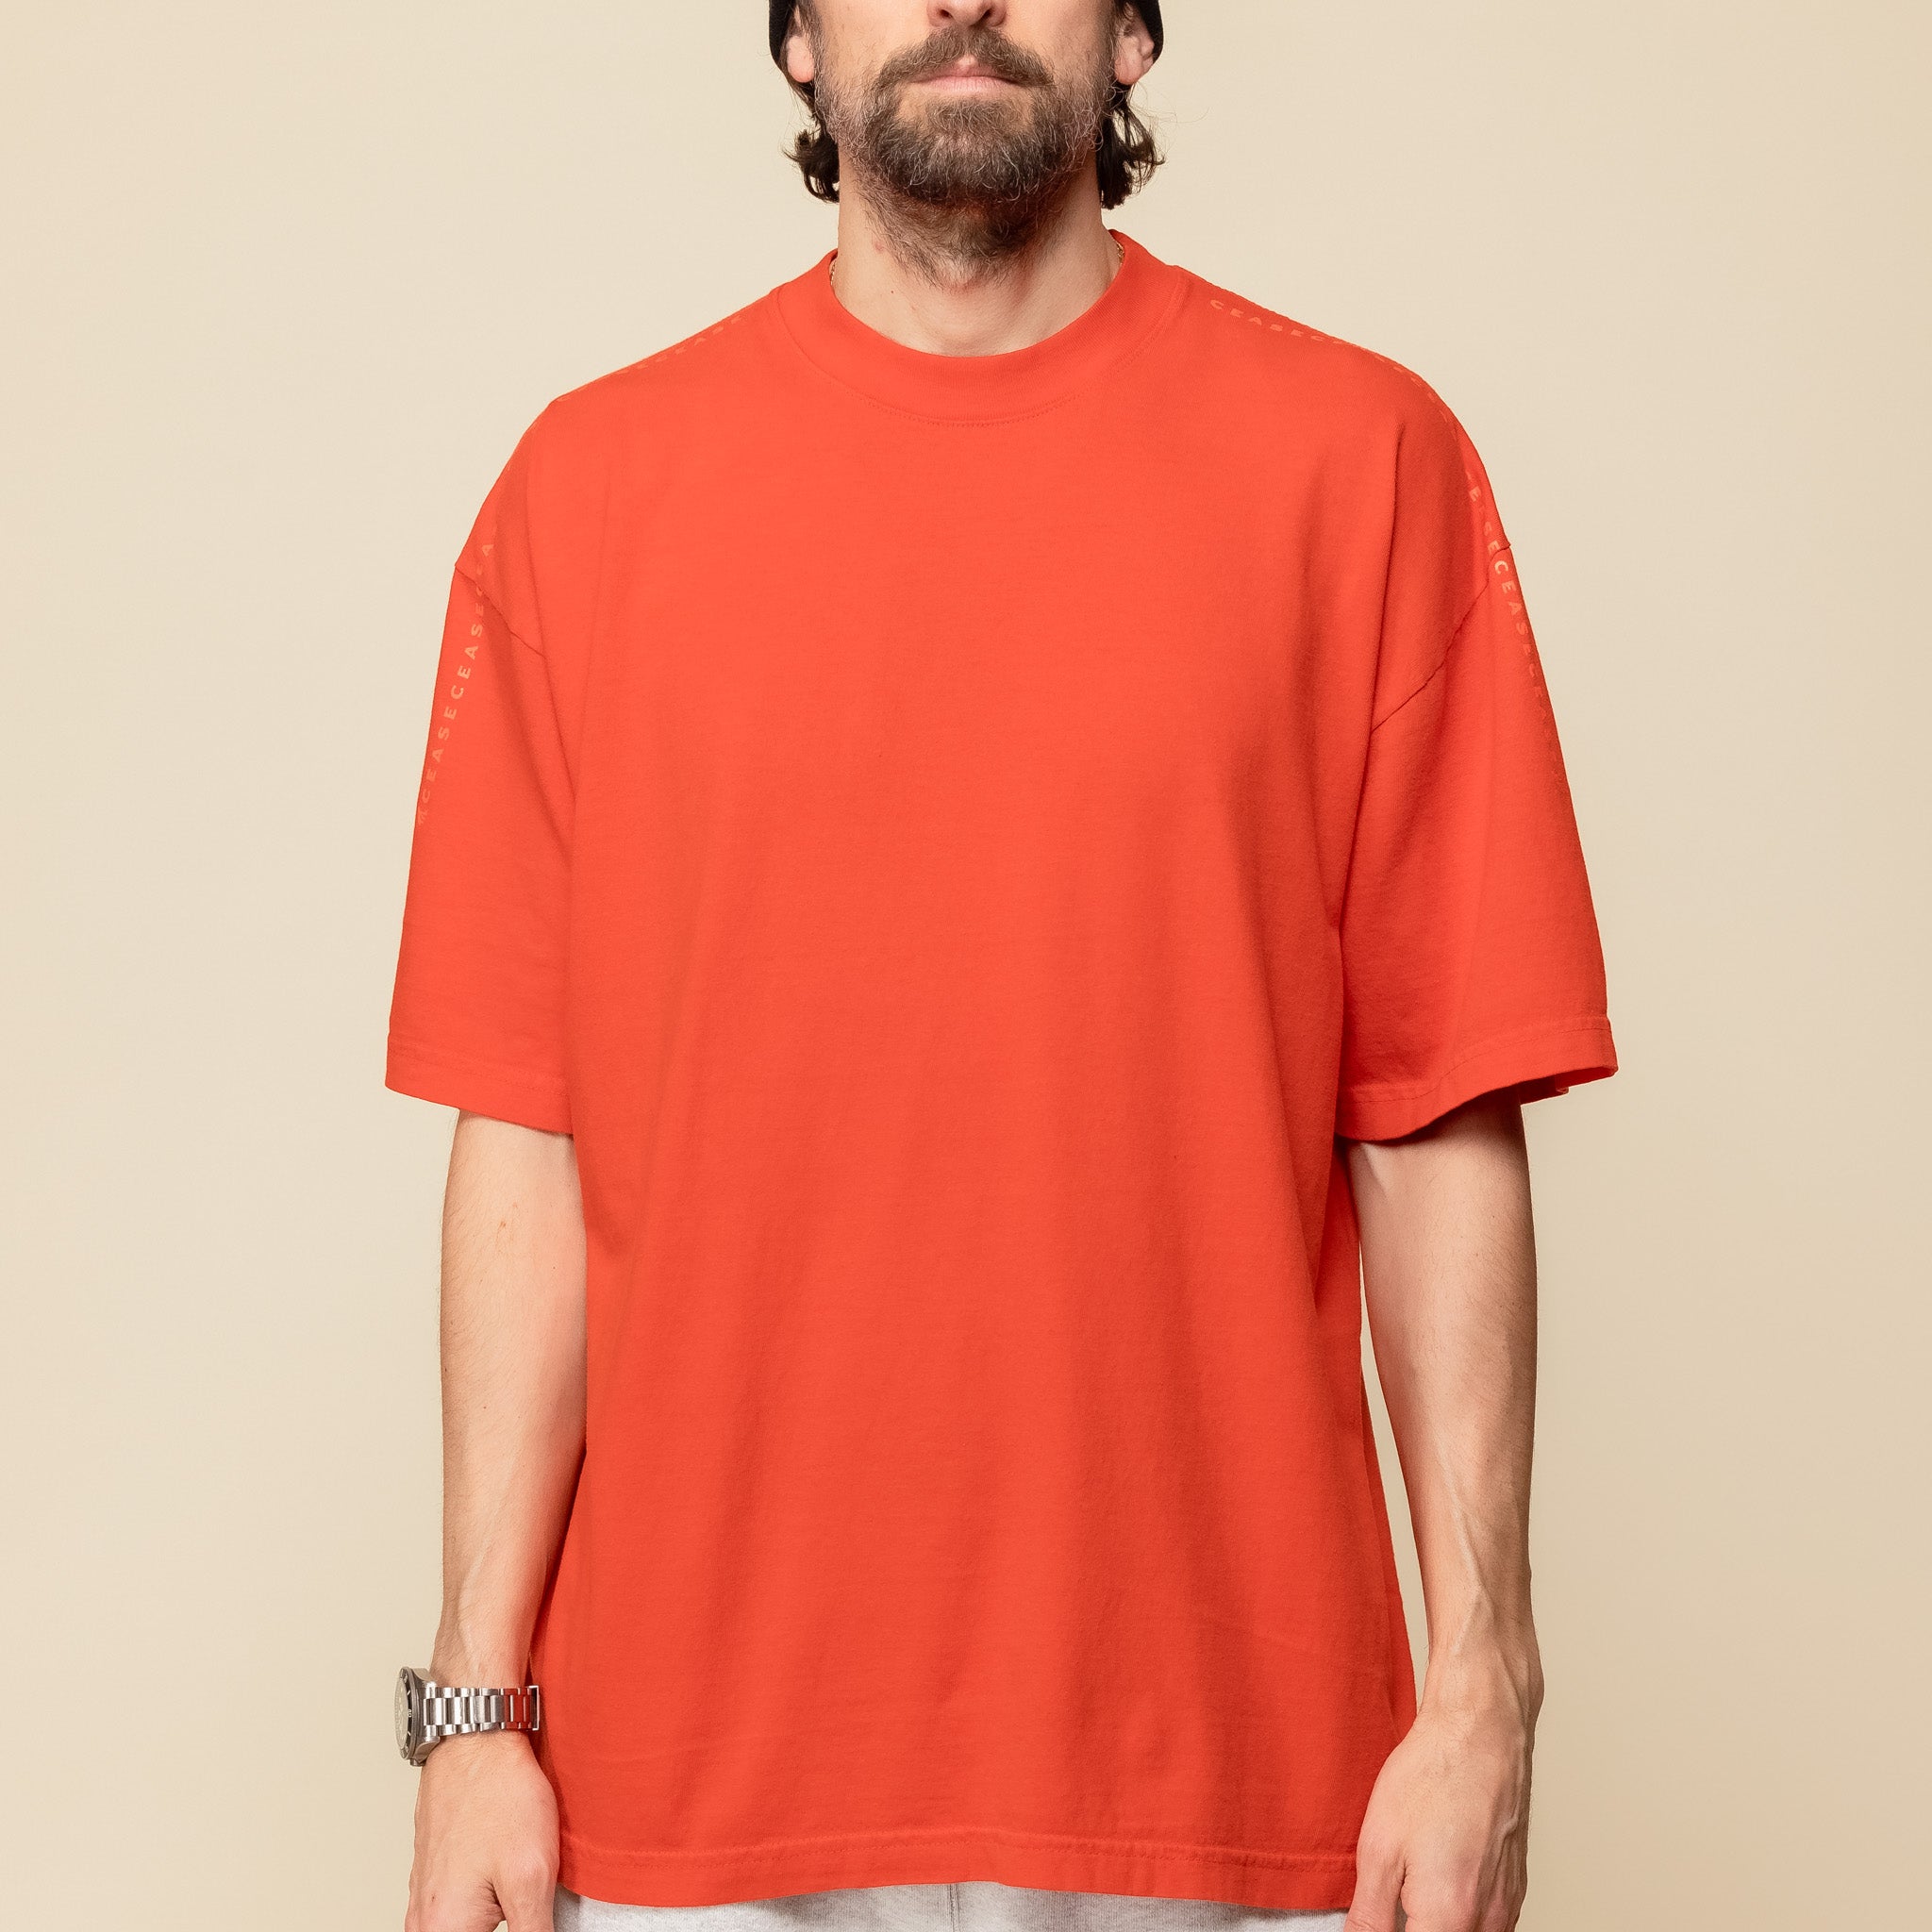 Cease - Shoulder Print T-Shirt - Orange "ceaseceasecease.com" "ceaseceasecease" "cease stockist" "dan pacitti"